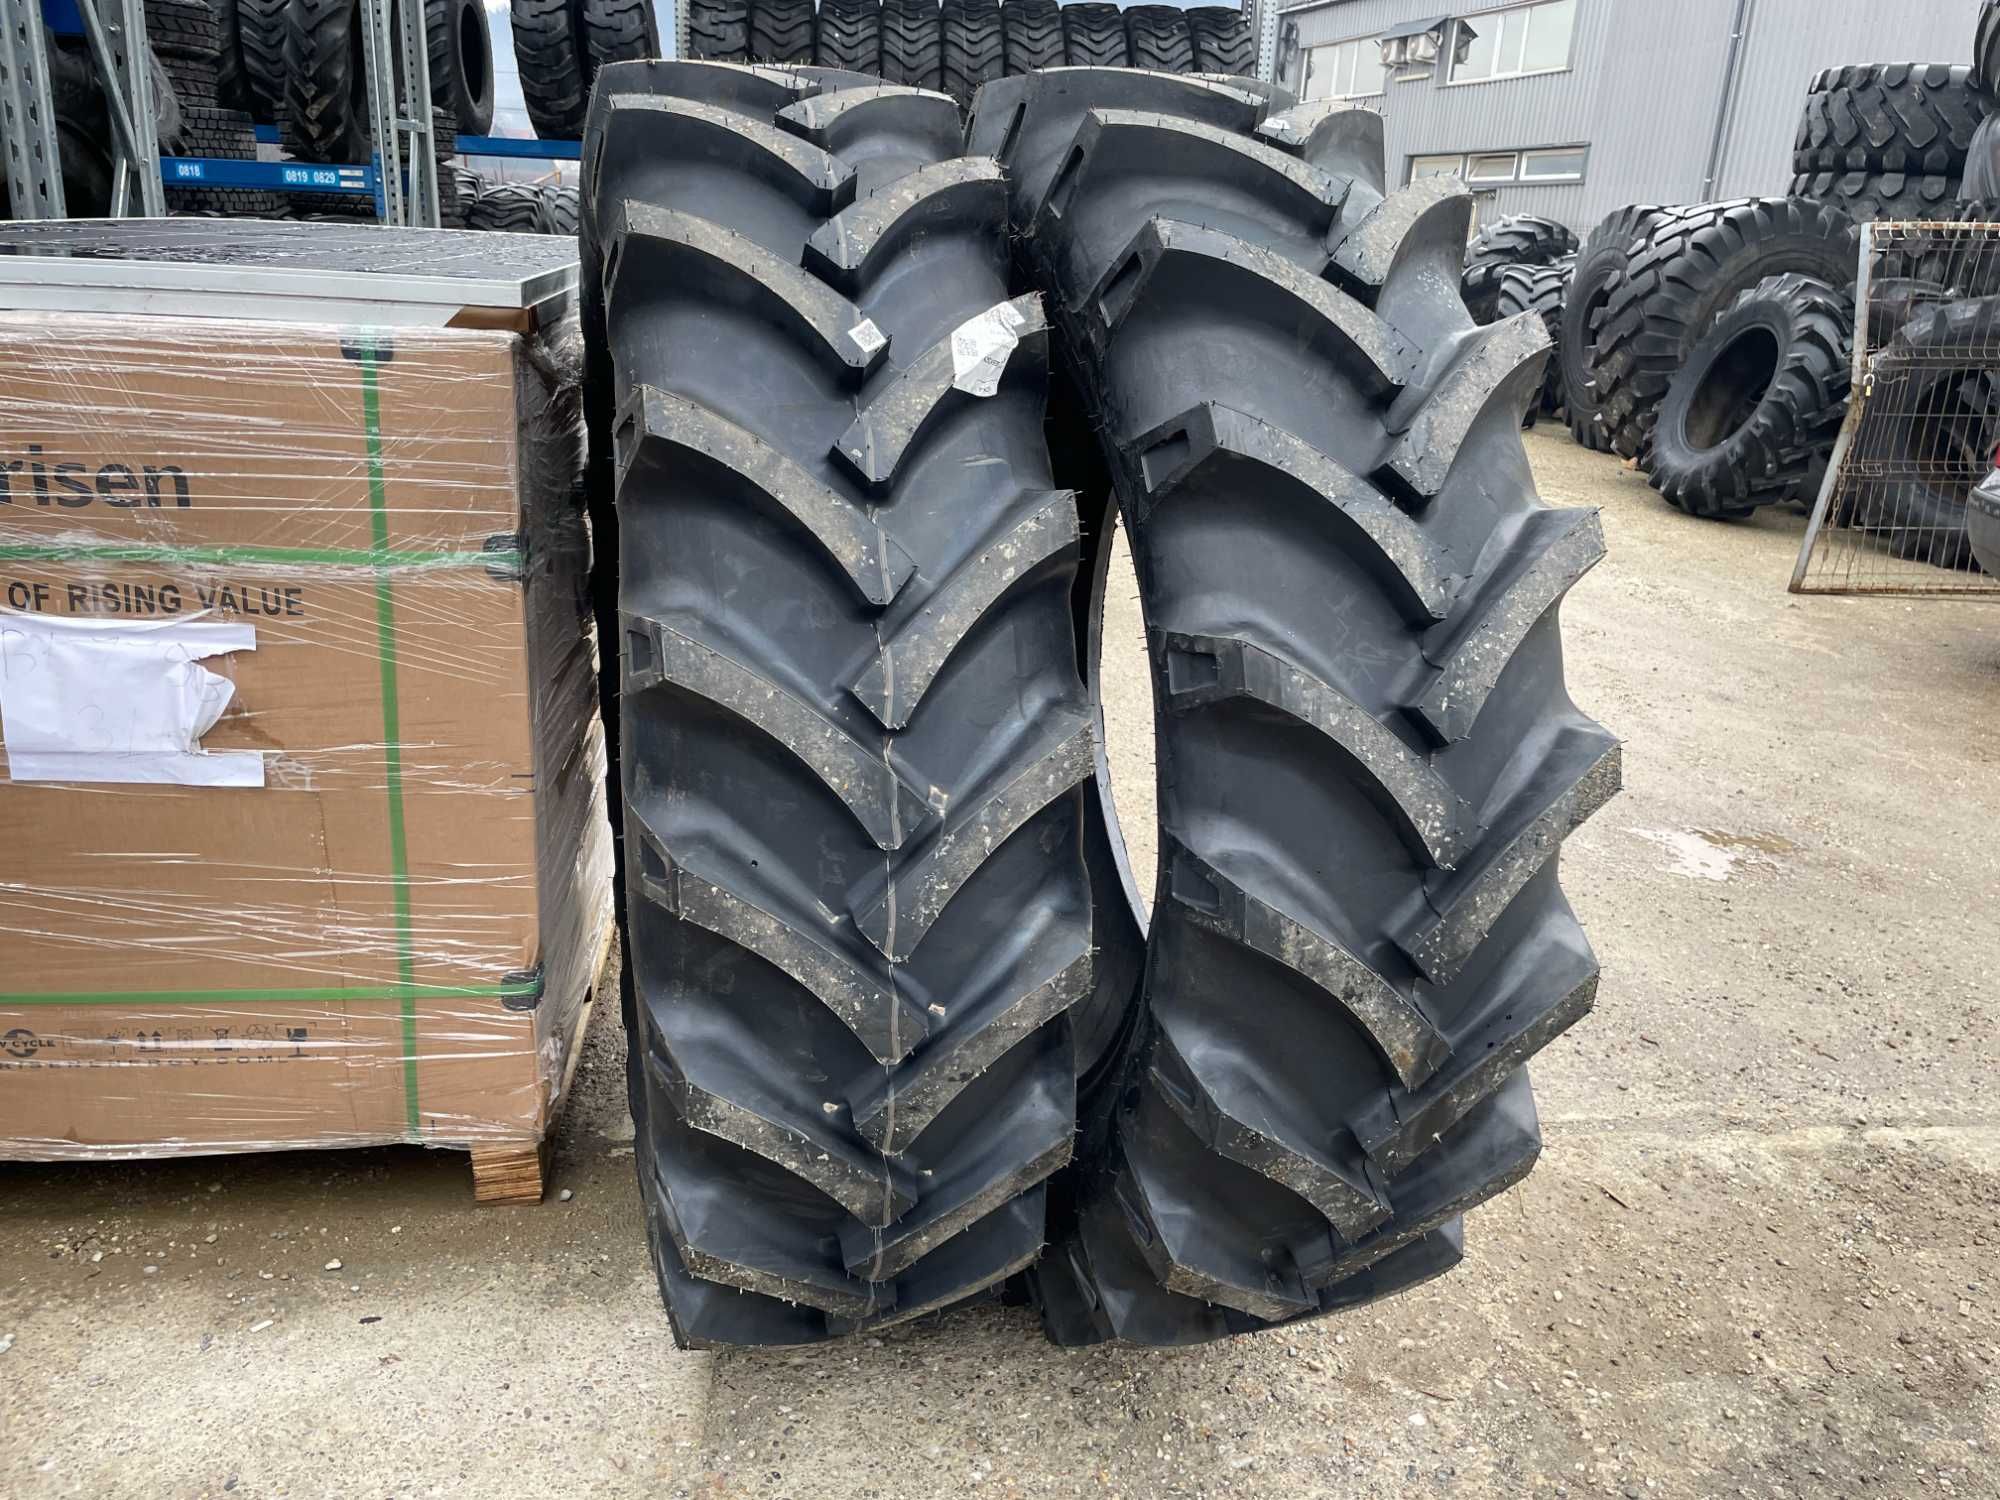 OZKA Anvelope noi agricole de tractor spate 16.9-38 14pliuri